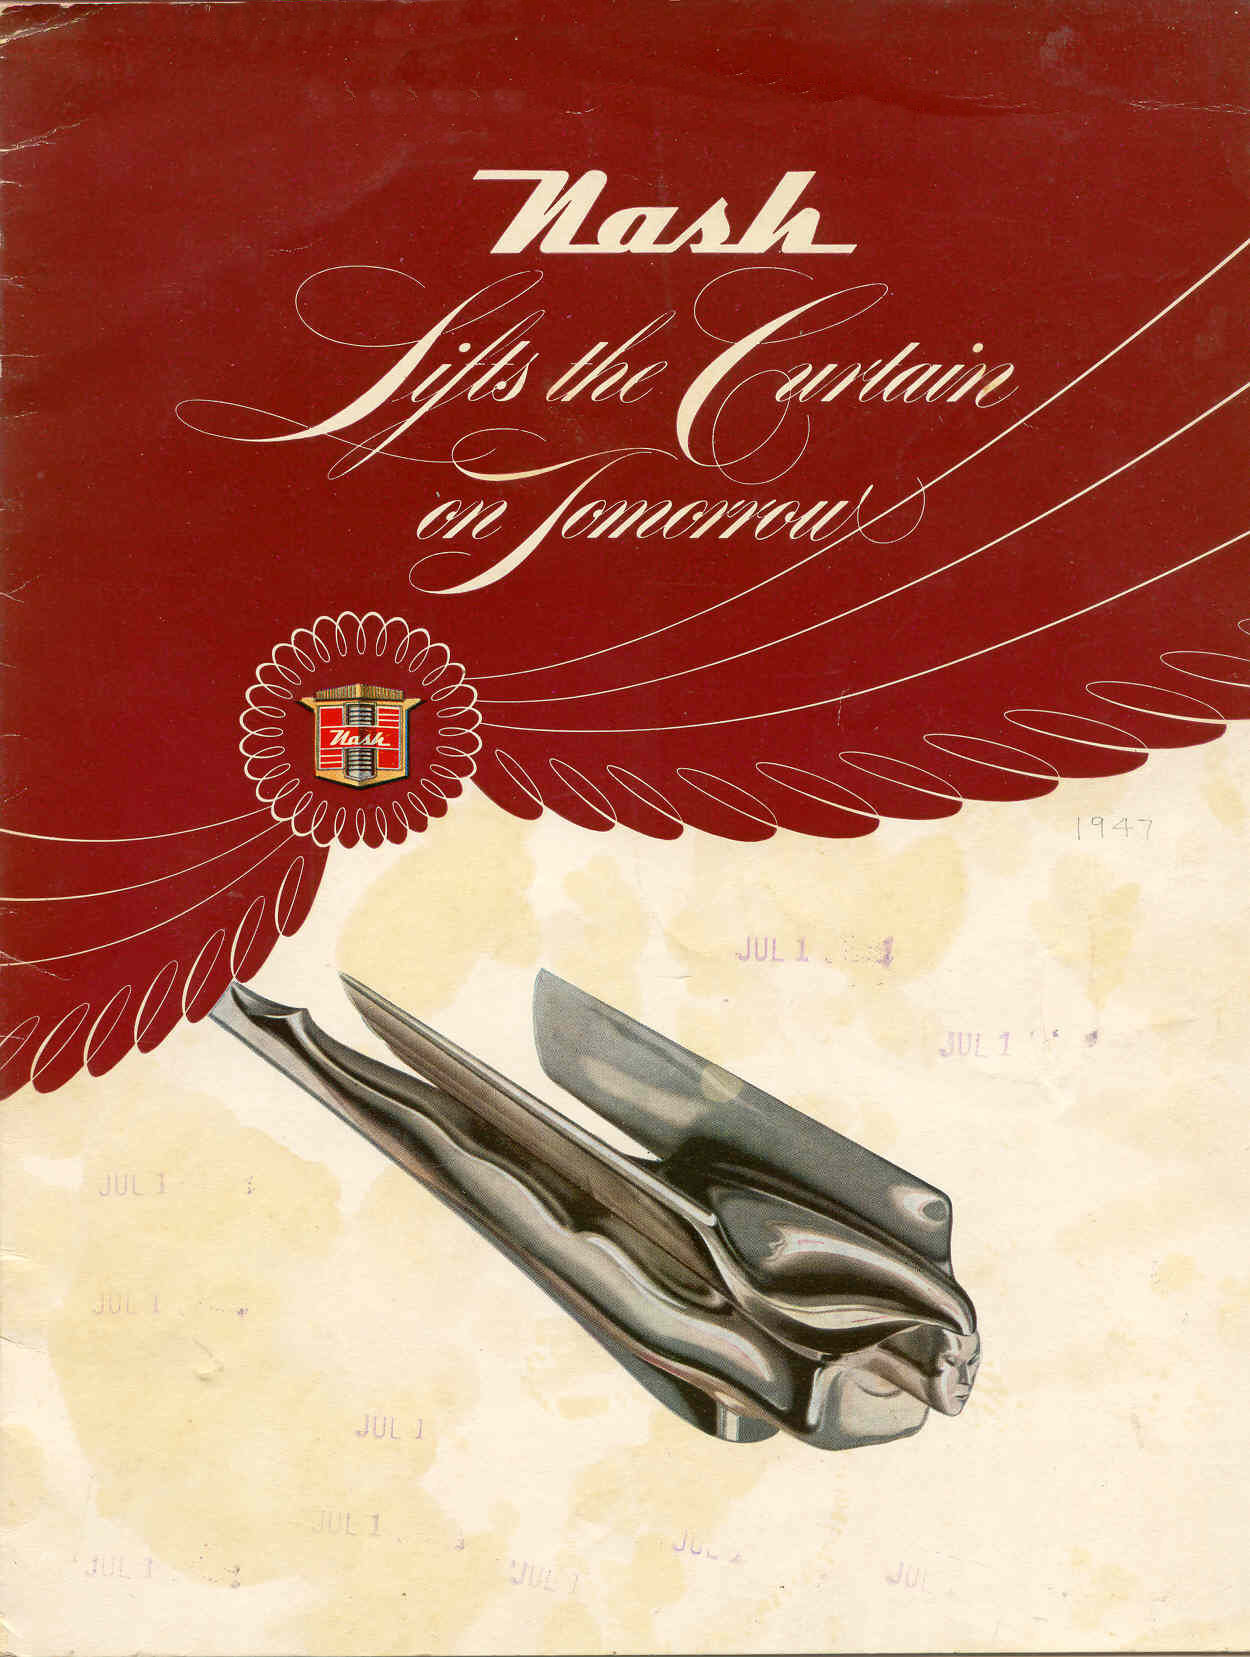 1947 Nash Brochure